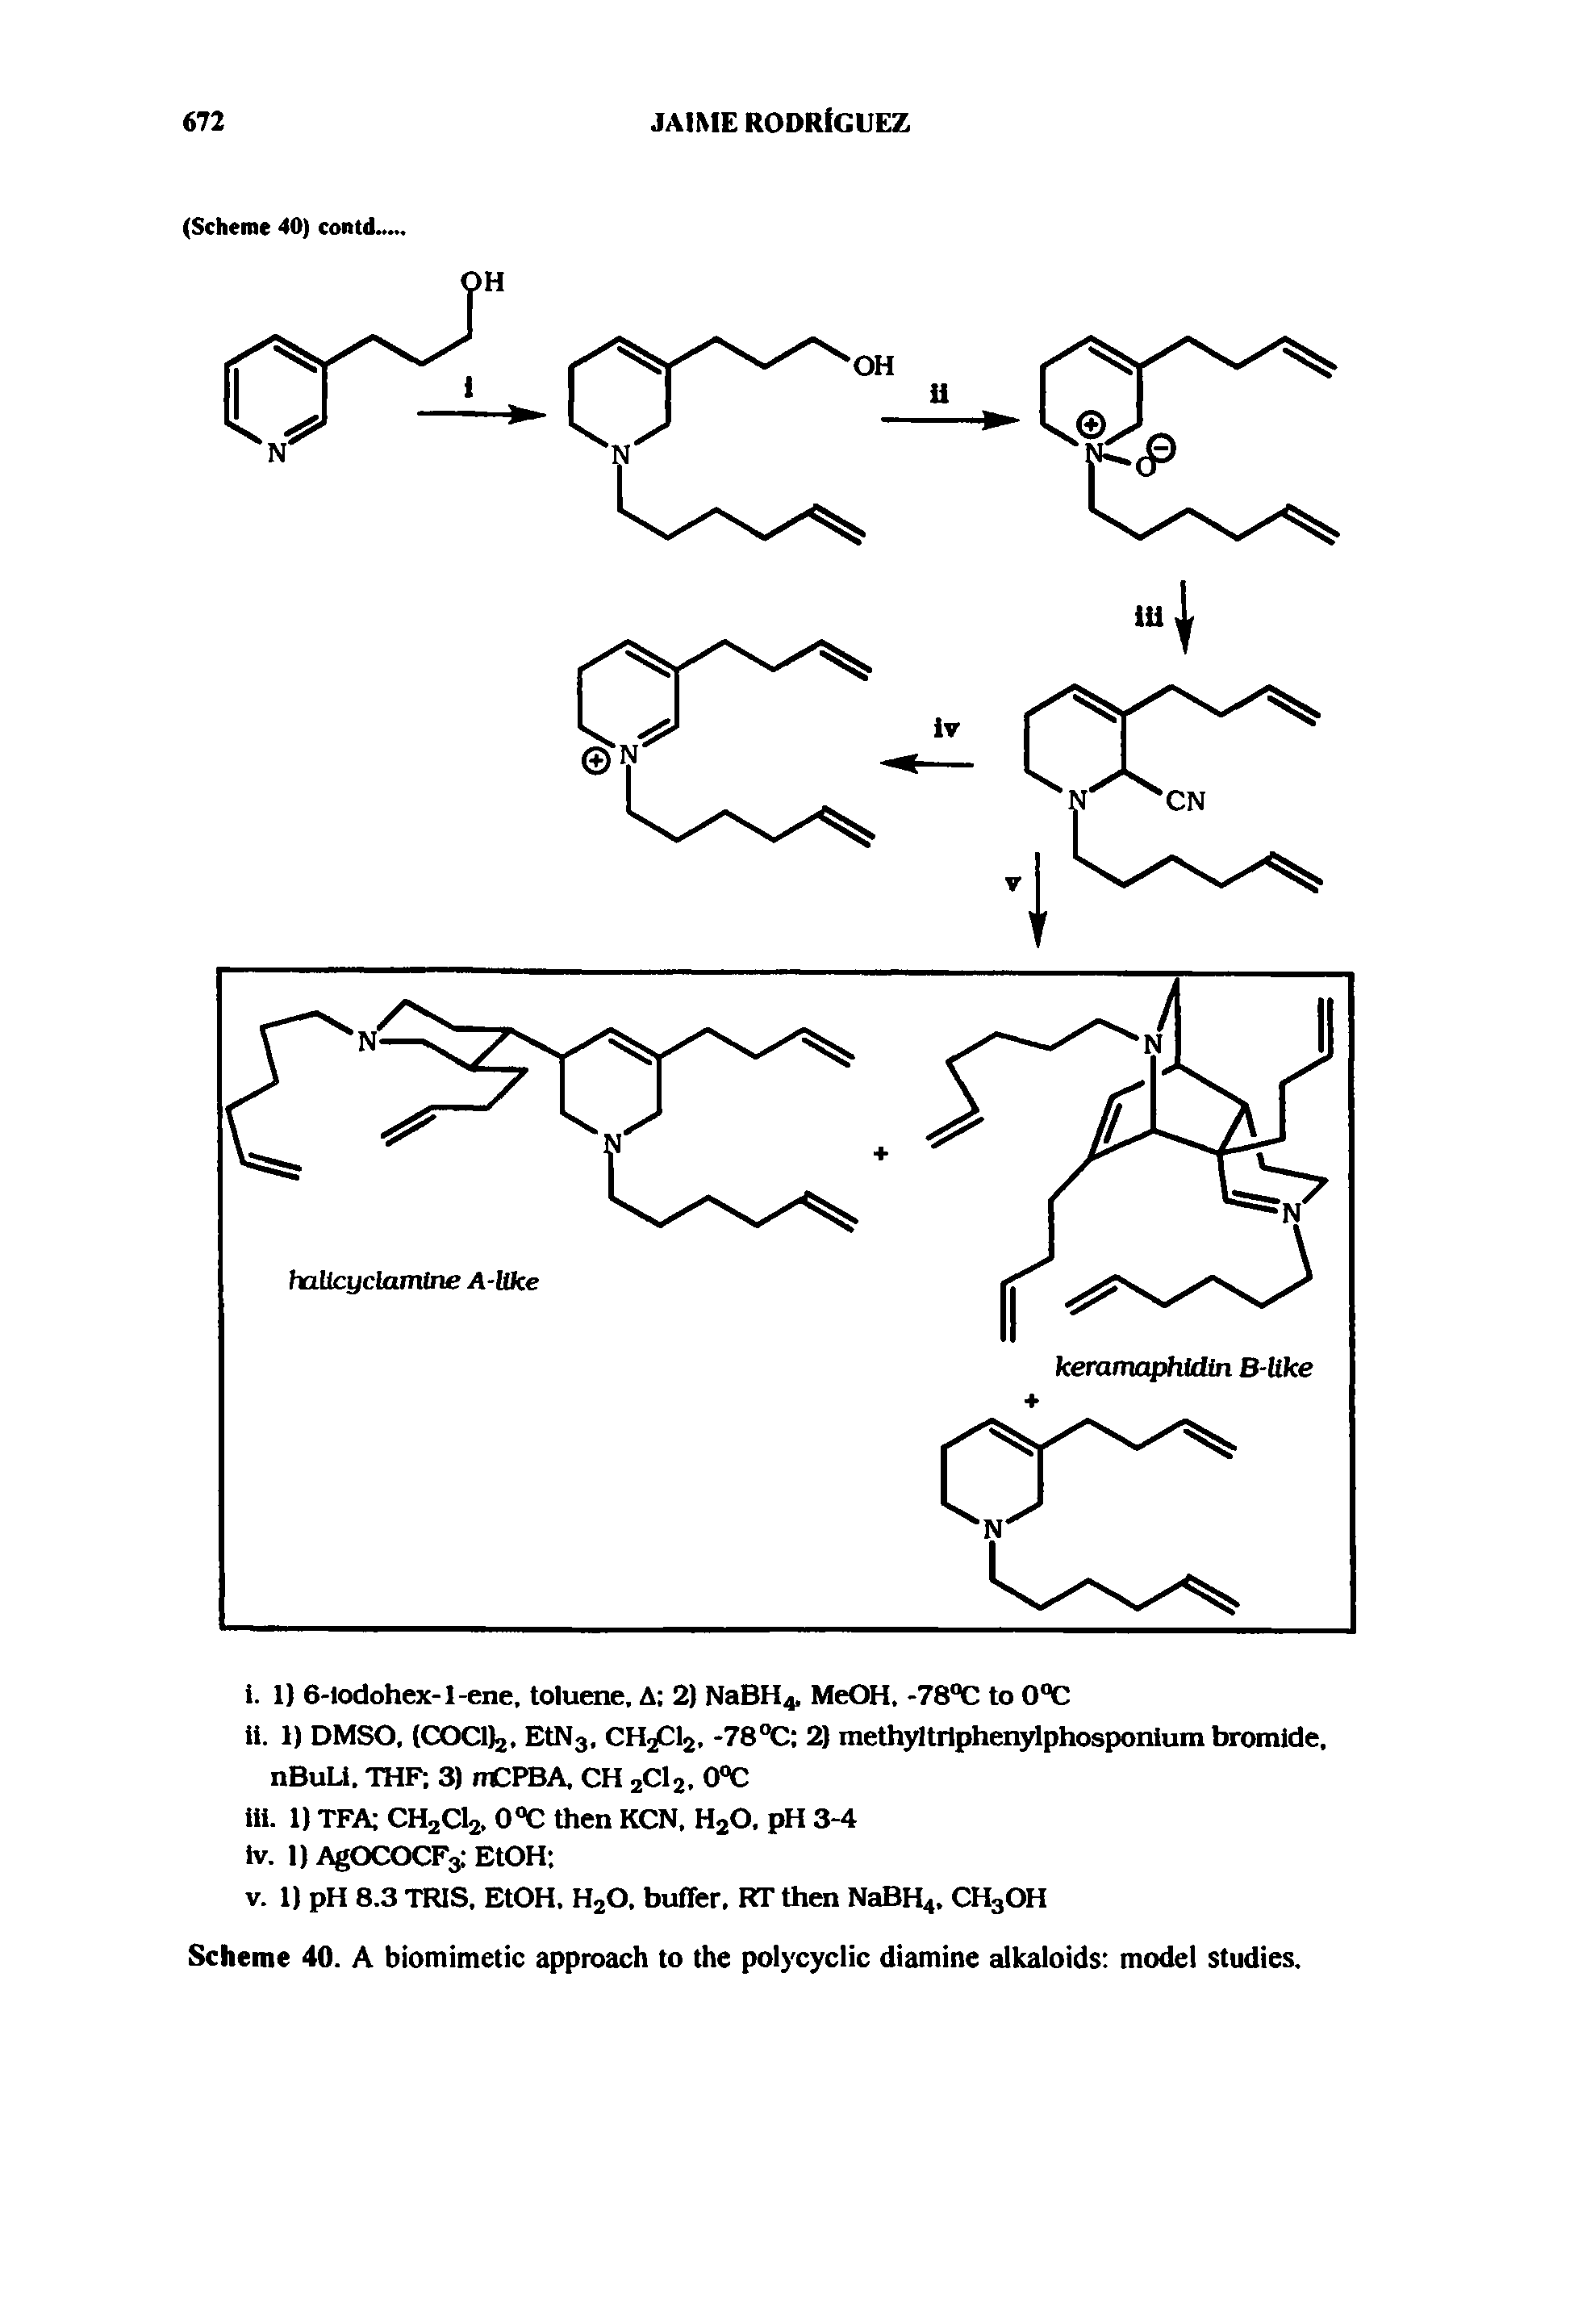 Scheme 40. A biomimetic approach to the polycyclic diamine alkaloids model studies.